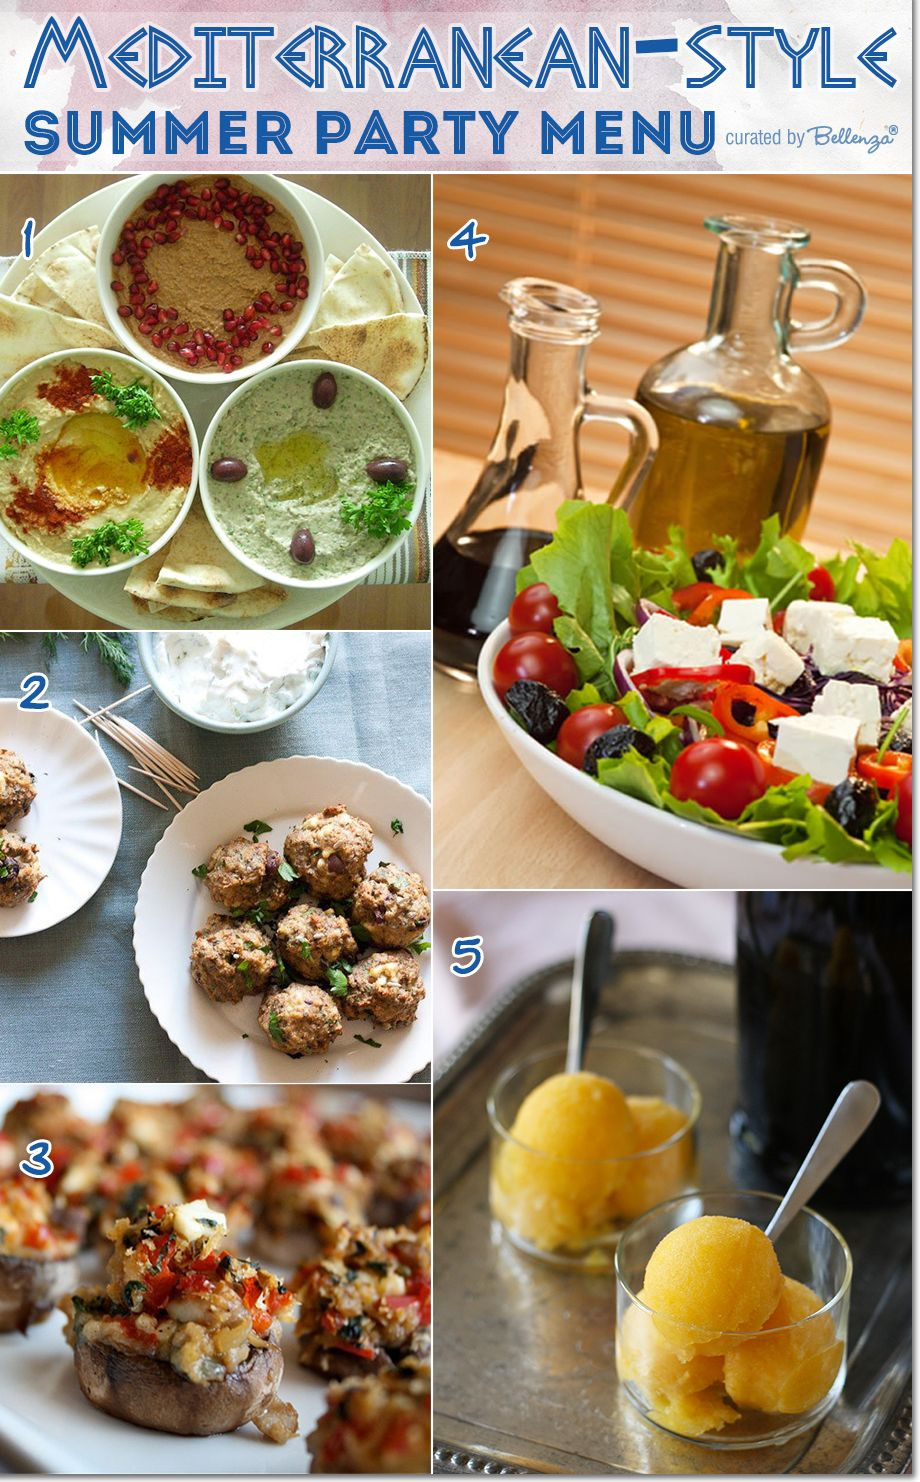 Summer Dinner Party Menu Ideas Recipes
 Menu Ideas for Hosting a Mediterranean style Summer Party